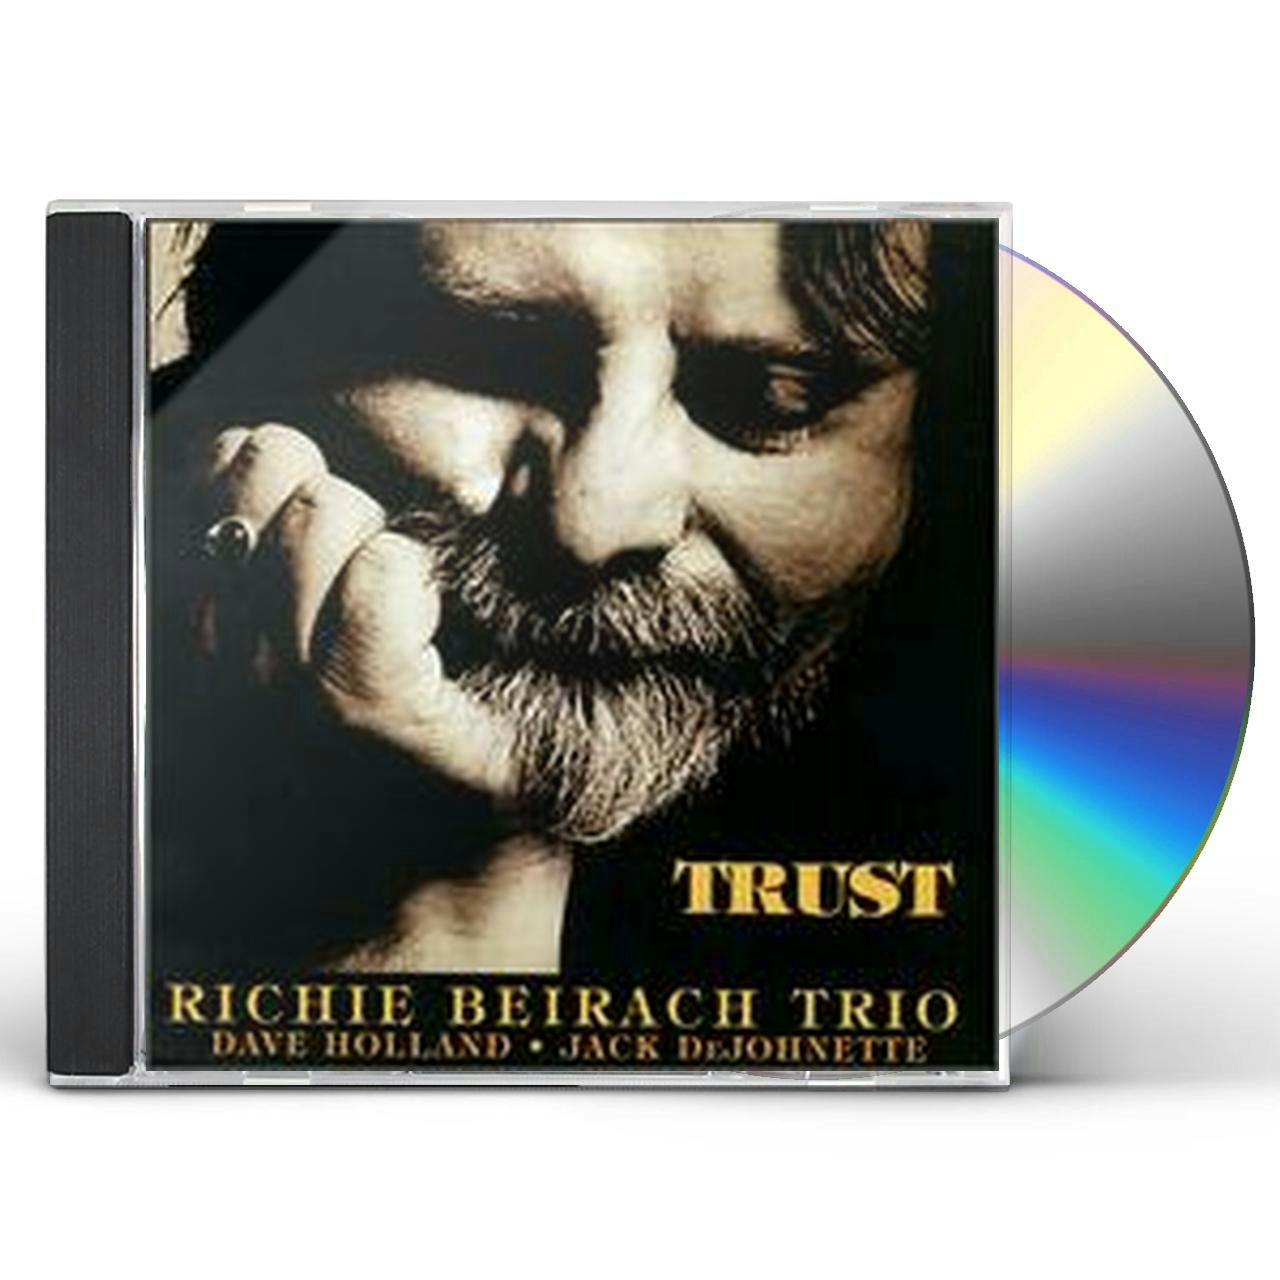 trust cd - Richie Beirach